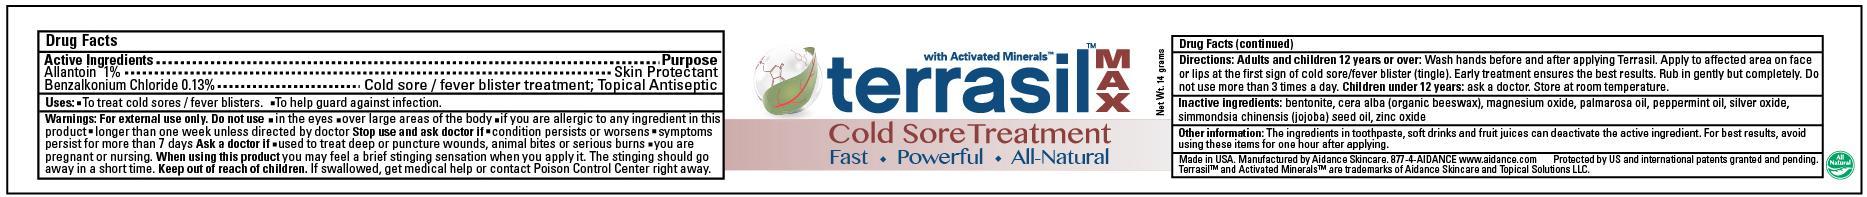 Terrasil Cold Sore Treatment Max (Allantoin, Benzalkonium Chloride) Ointment [Aidance Skincare & Topical Solutions, Llc]